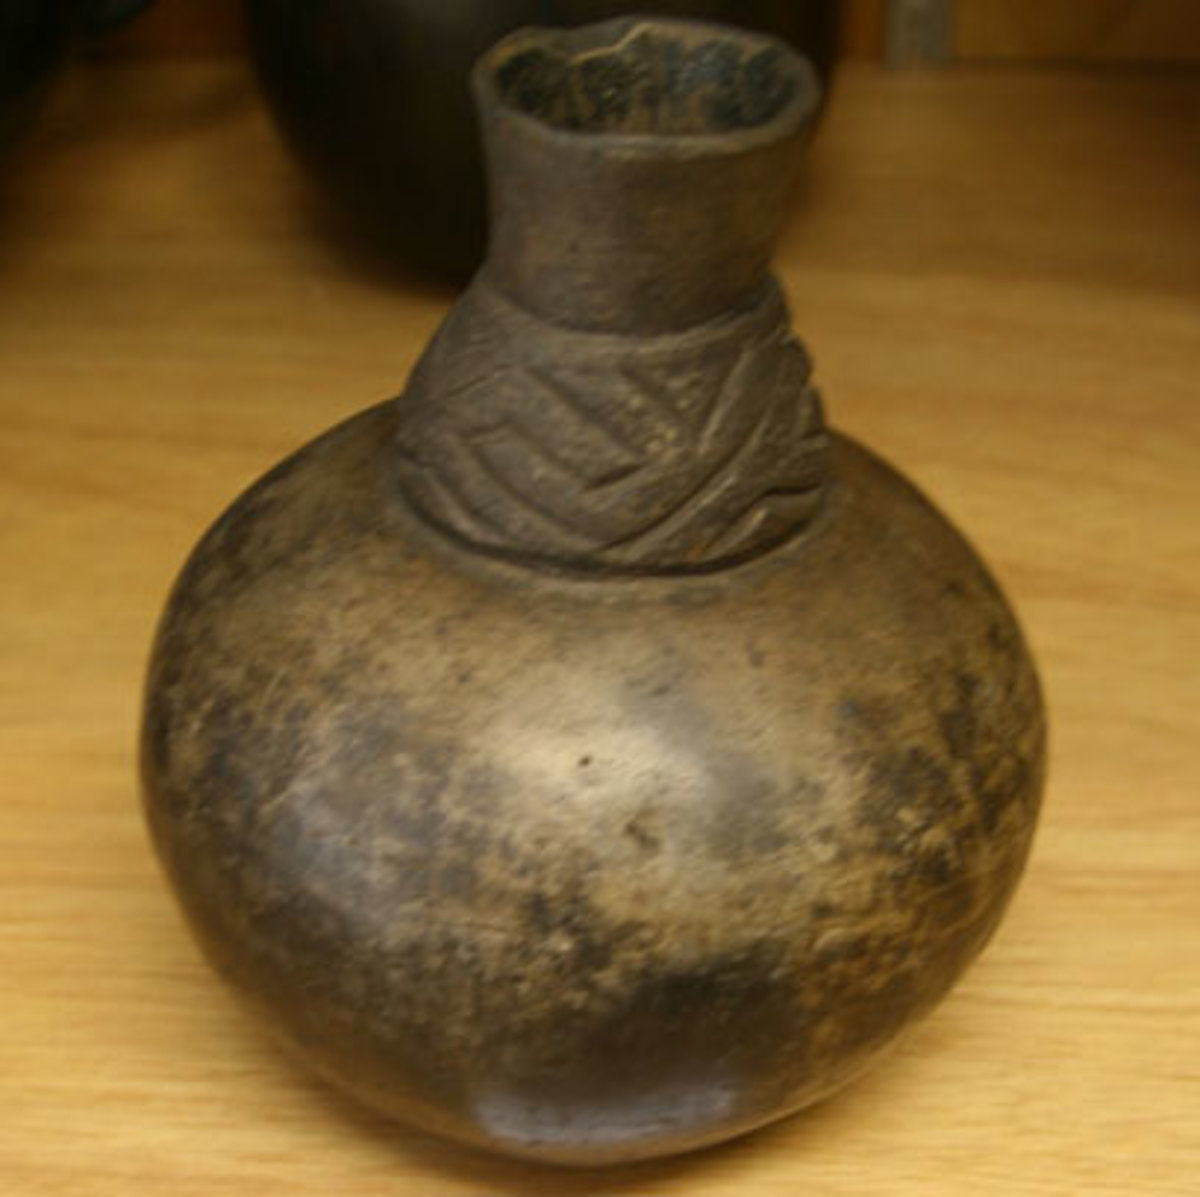 Zulu earthenware/ceramic of the 19th Century